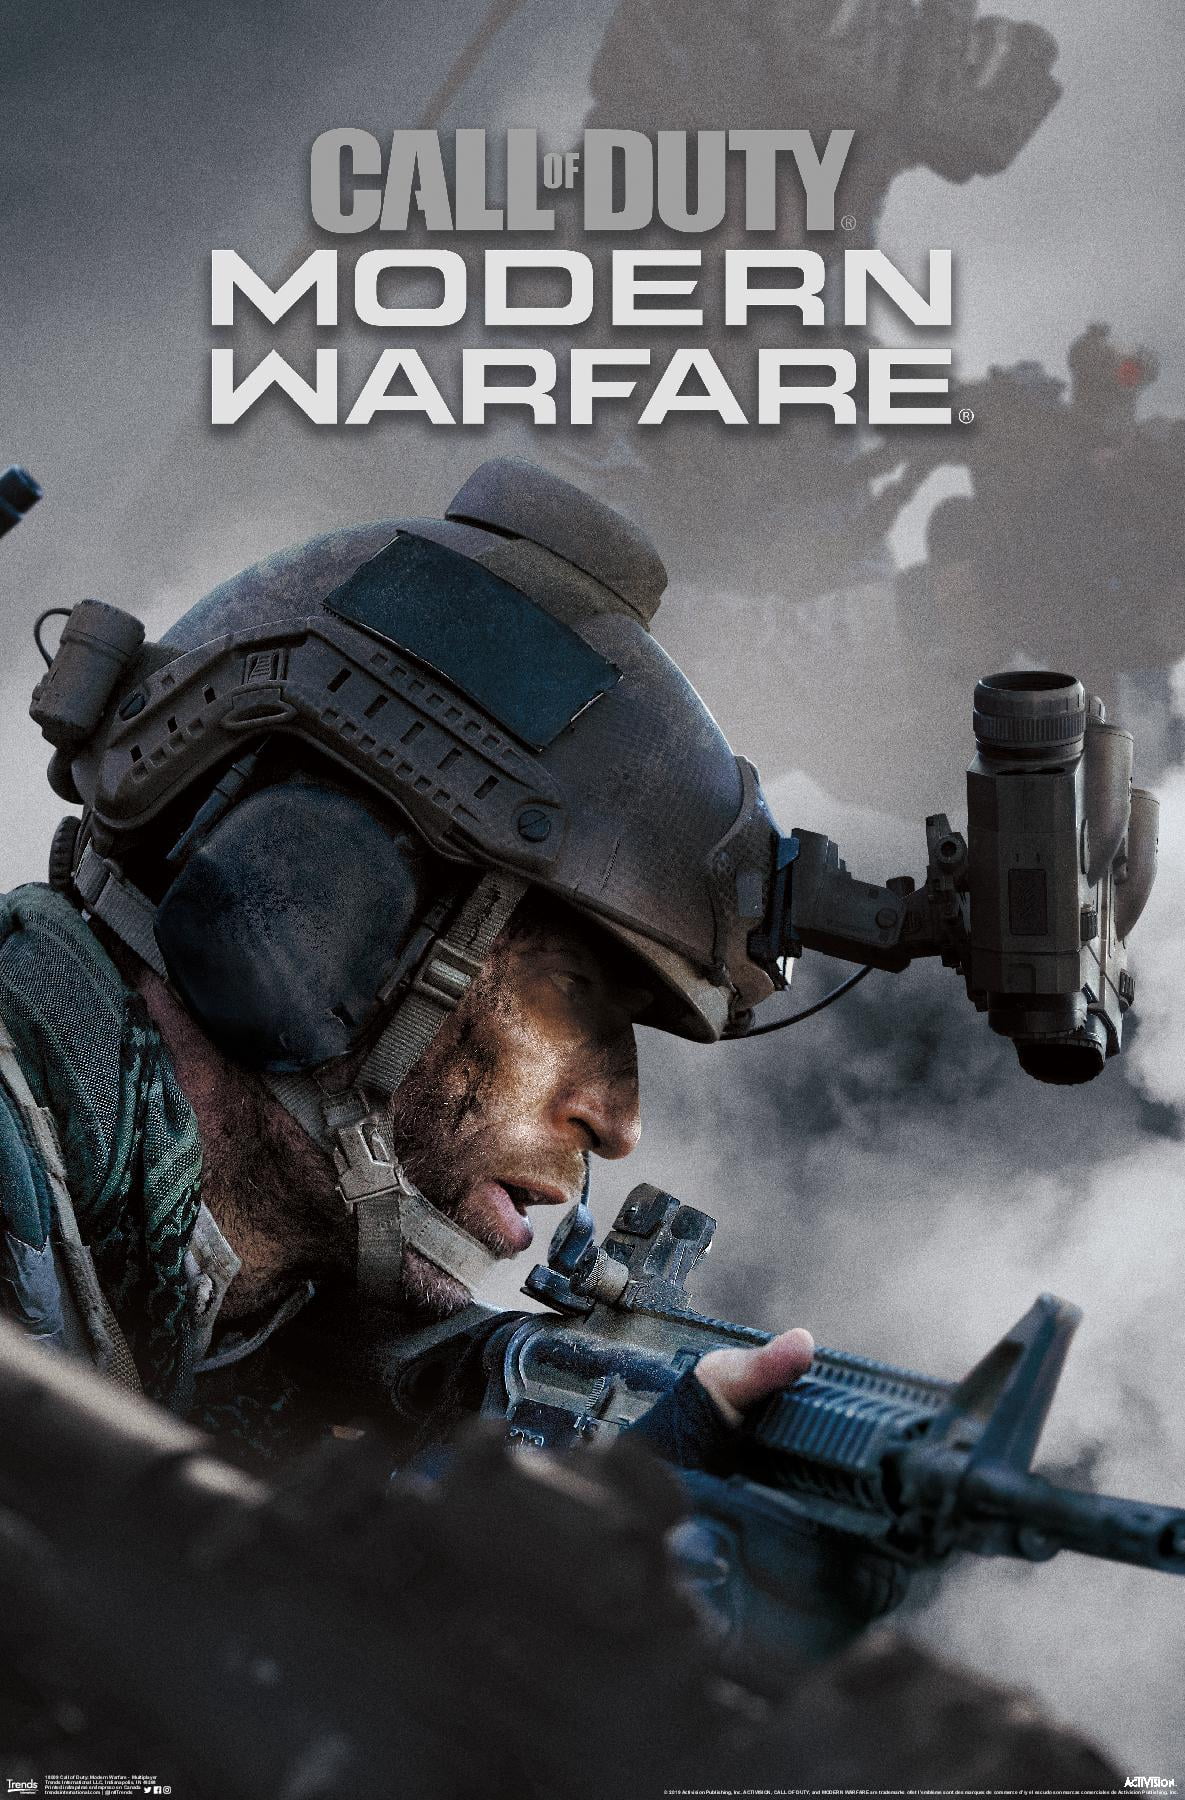 Call of Duty: Modern Warfare - Multiplayer Wall Poster, 22.375